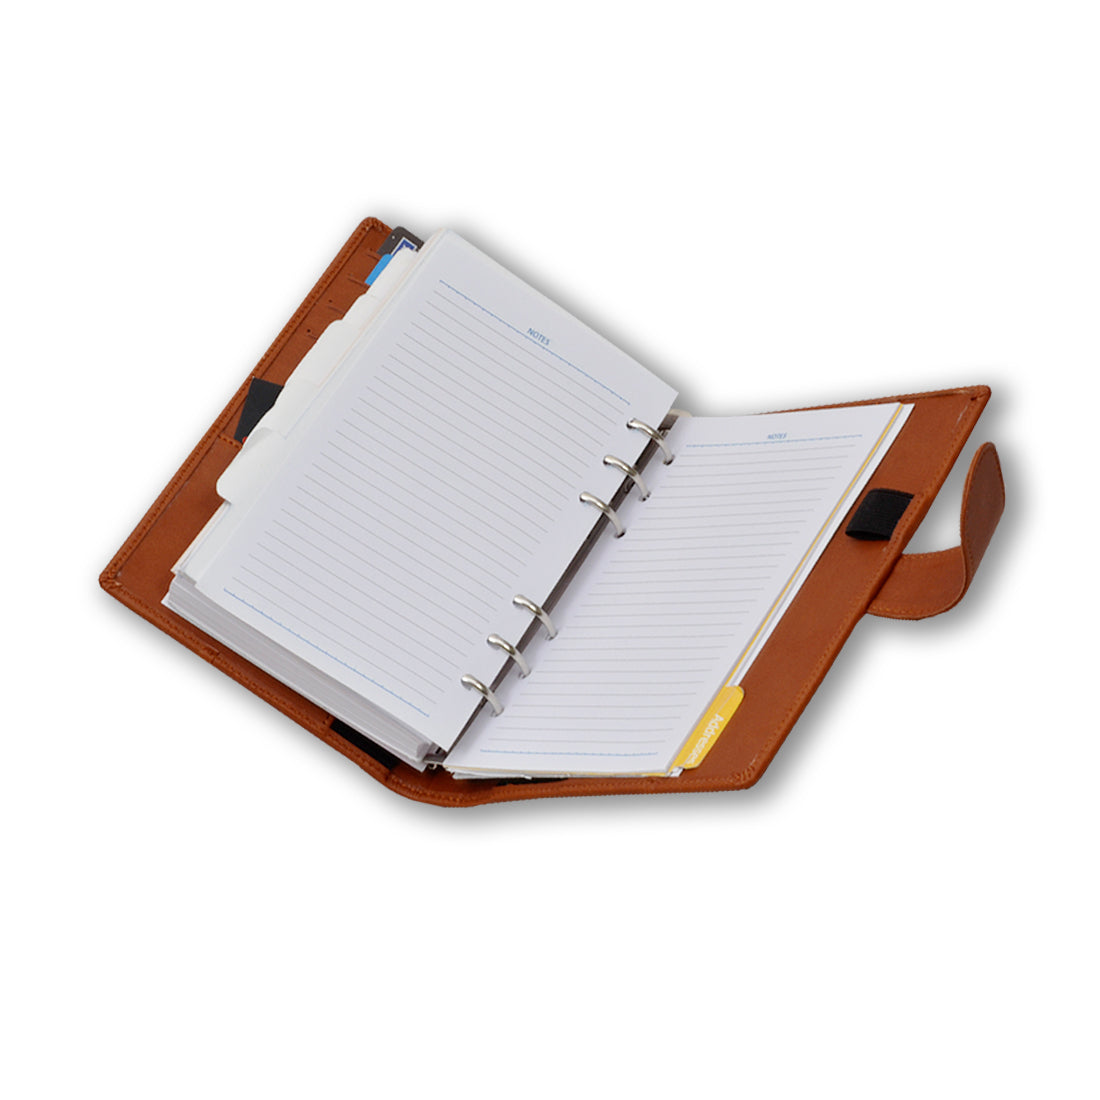 Buy 2023 Diary Organiser, To Do List Pad, Planner Online 